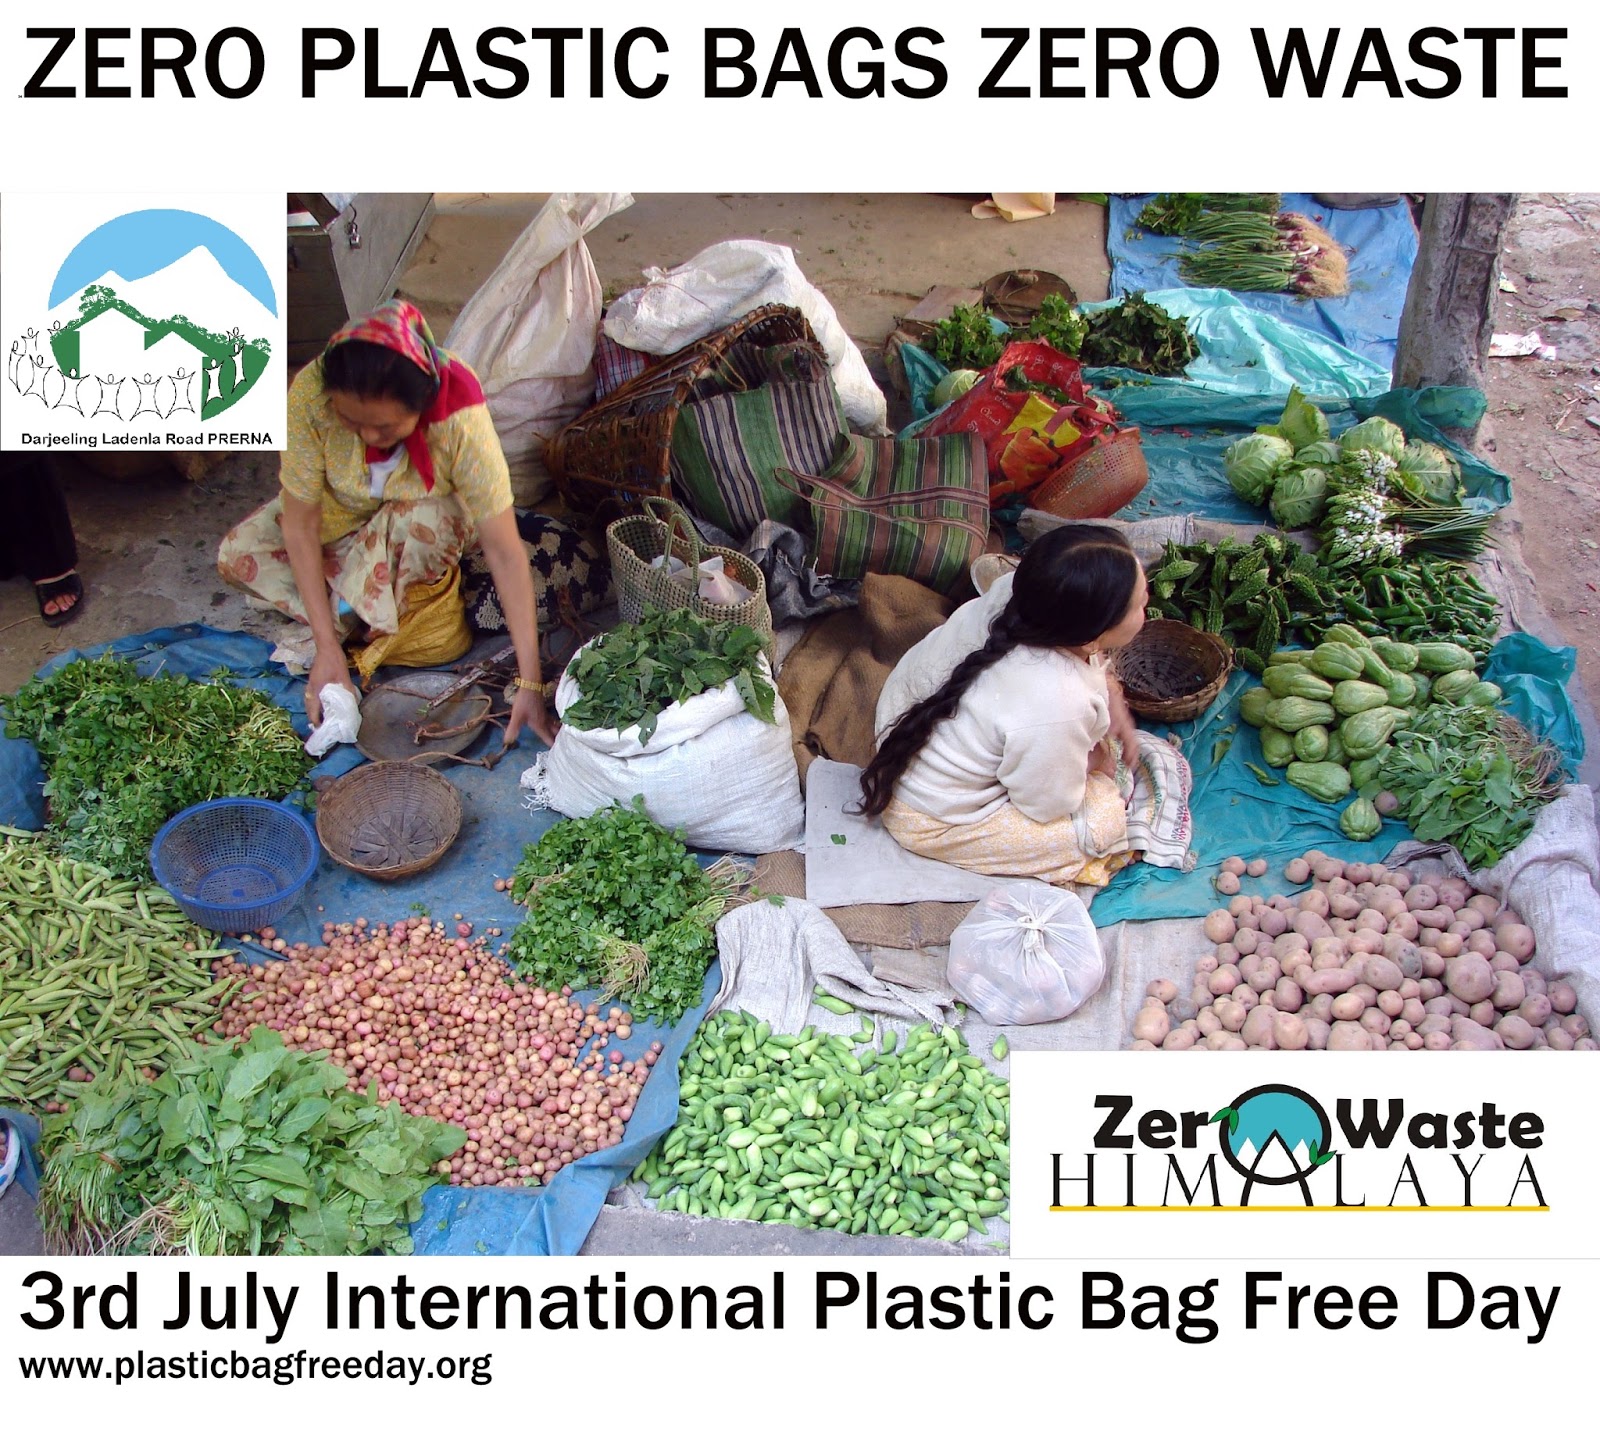 darjeelingprerna: 3rd July International Plastic Bag Free Day